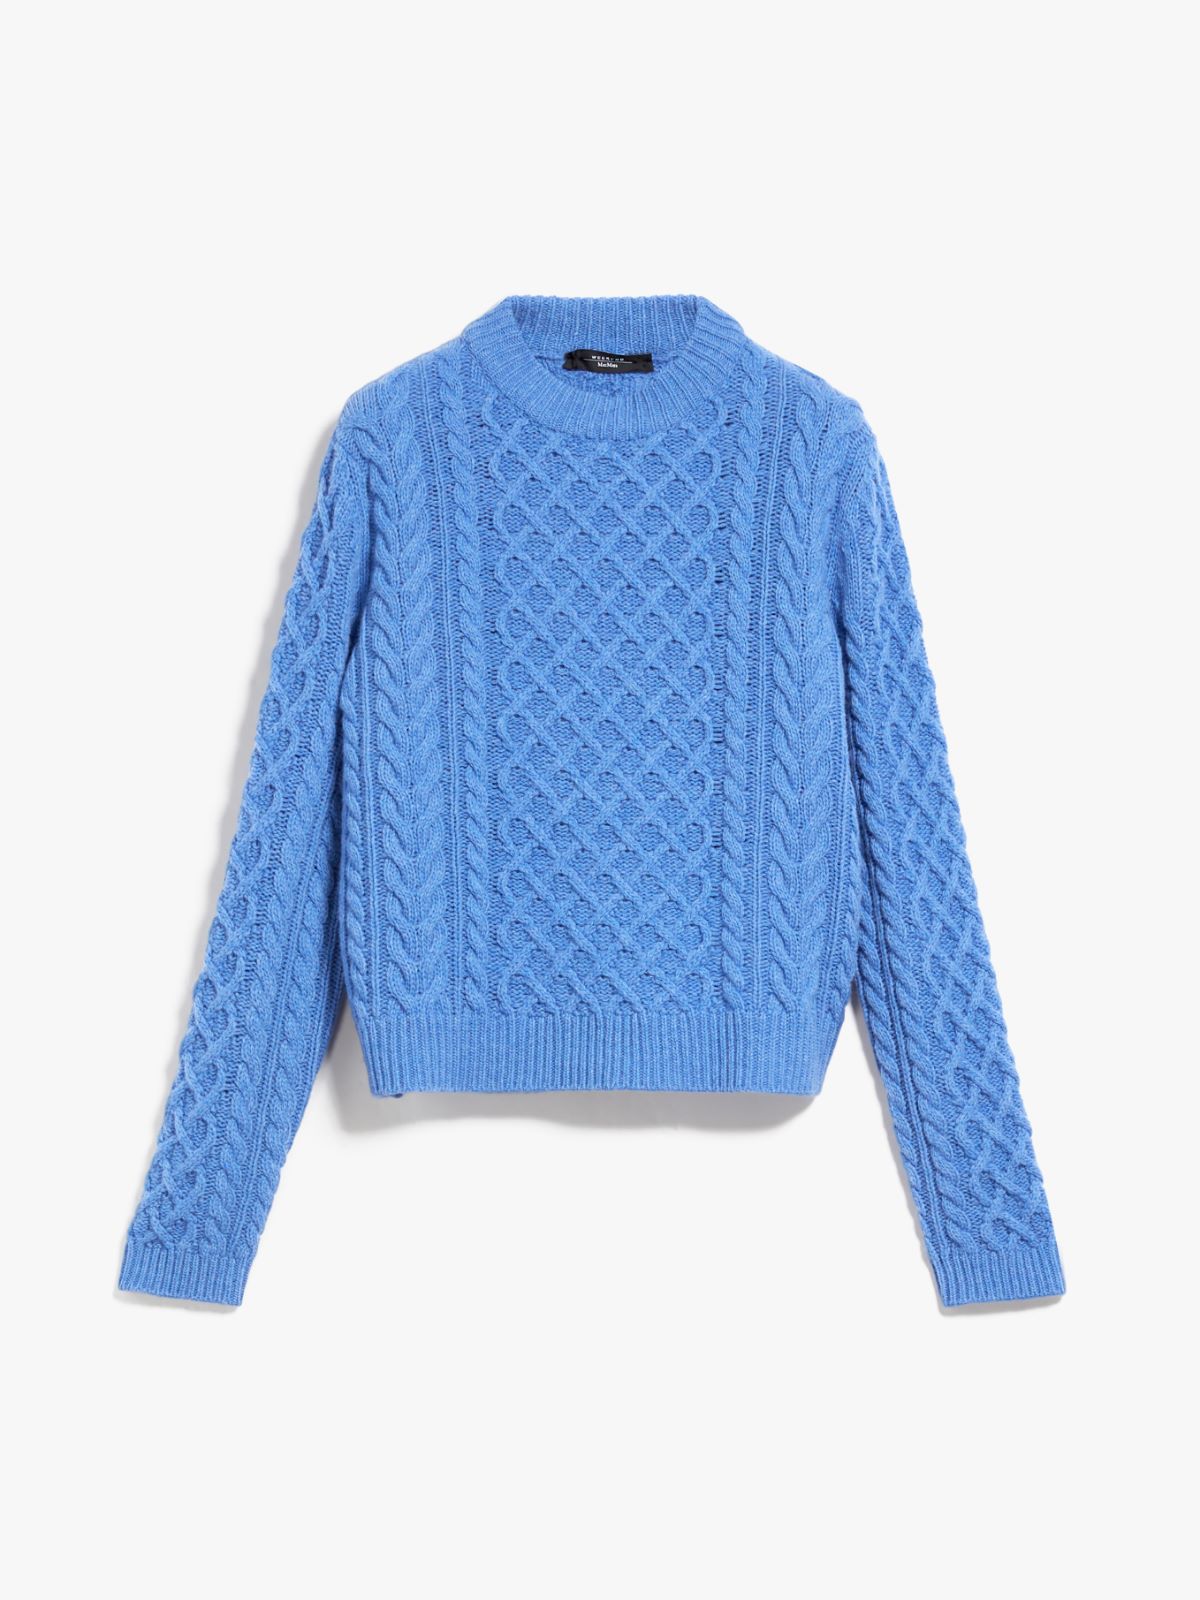 Carded wool sweater - LIGHT BLUE - Weekend Max Mara - 6